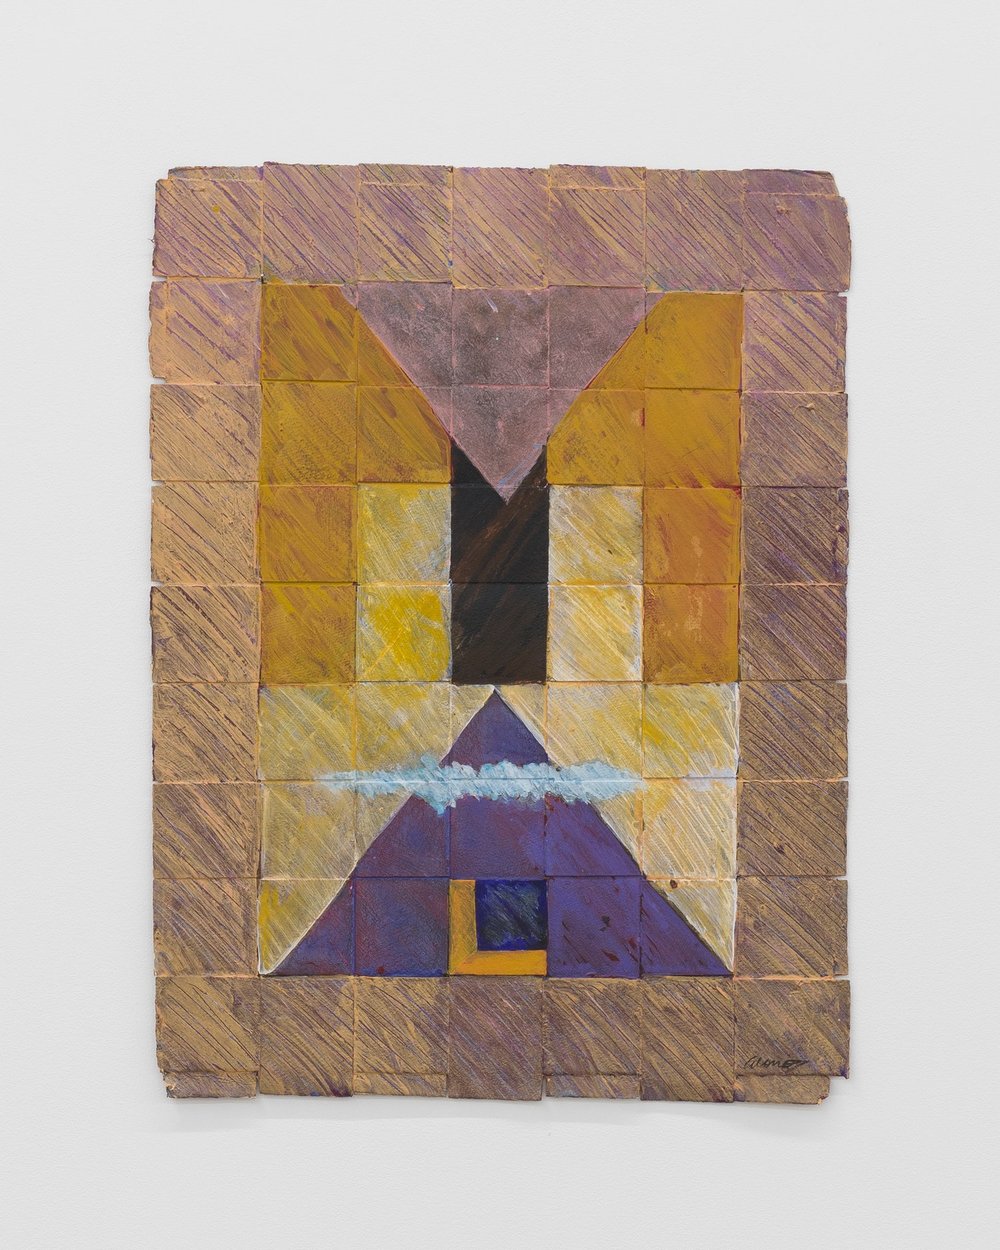   Alonzo Davis    Pyramid Room , 1992 acrylic on woven paper 30 x 22 inches 